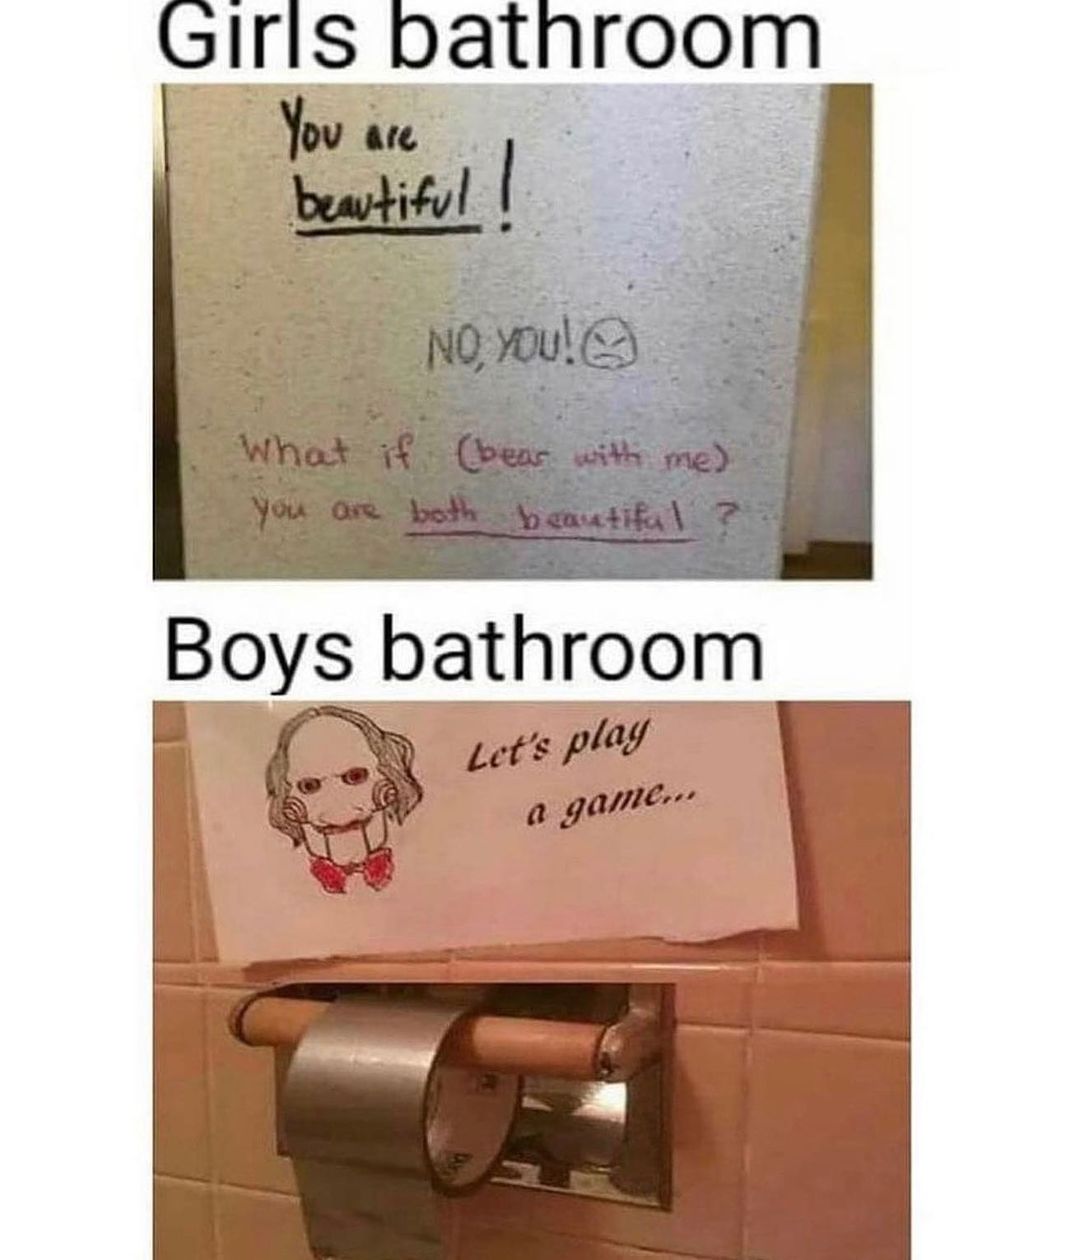 girls bathroom vs boys bathroom meme - Girls bathroom You are beautiful! No, You! What if bear with me you are both beautiful? Boys bathroom Let's play a game...